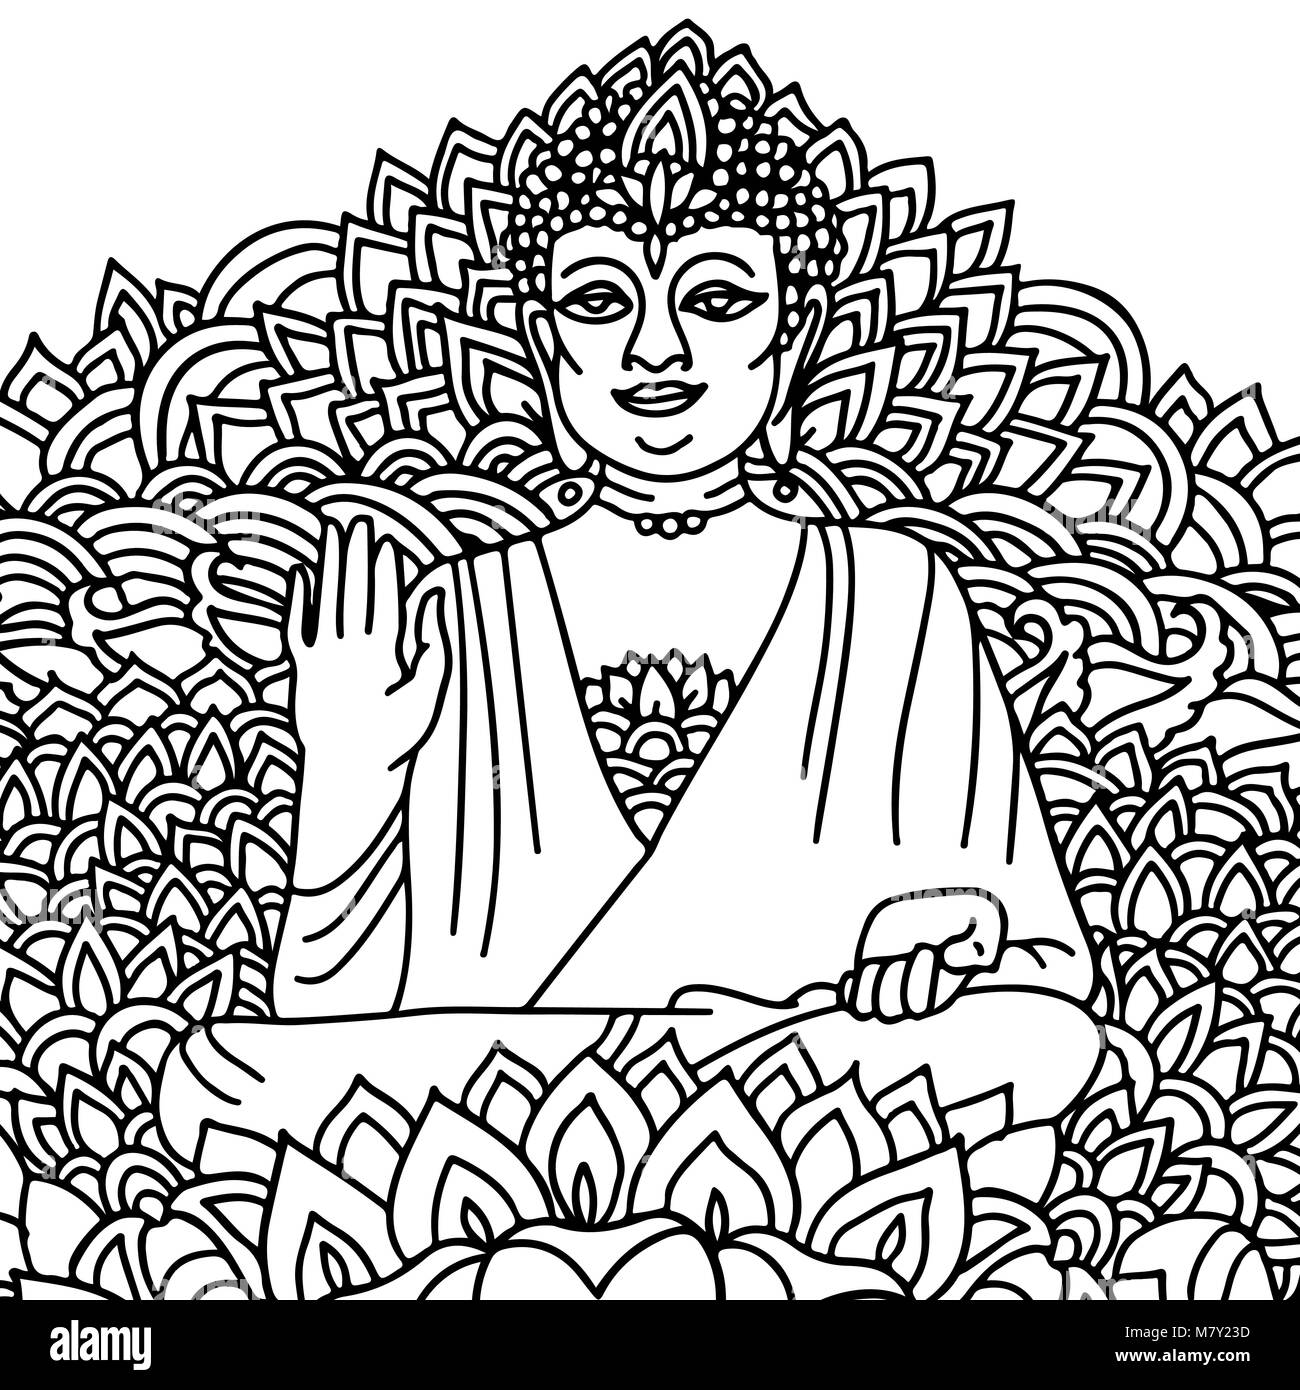 Sitting Buddha in a lotus flower. Mandala style print. Vector illustration. Stock Vector